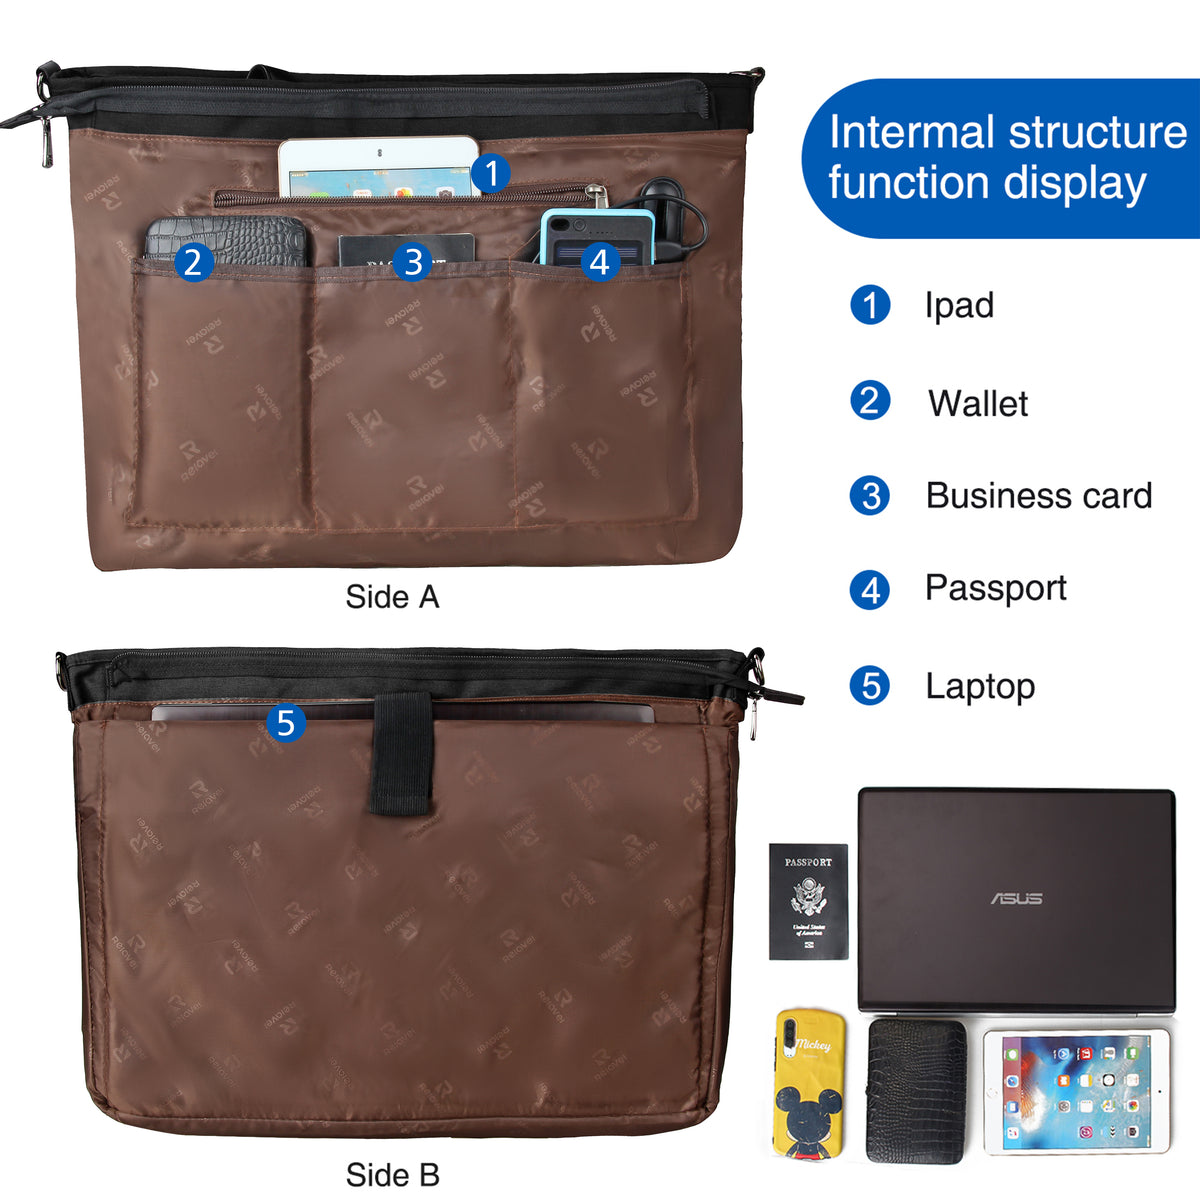 LOUIS VUITTON Monogram Carryall Laptop Travel Briefcase Clutch Bag